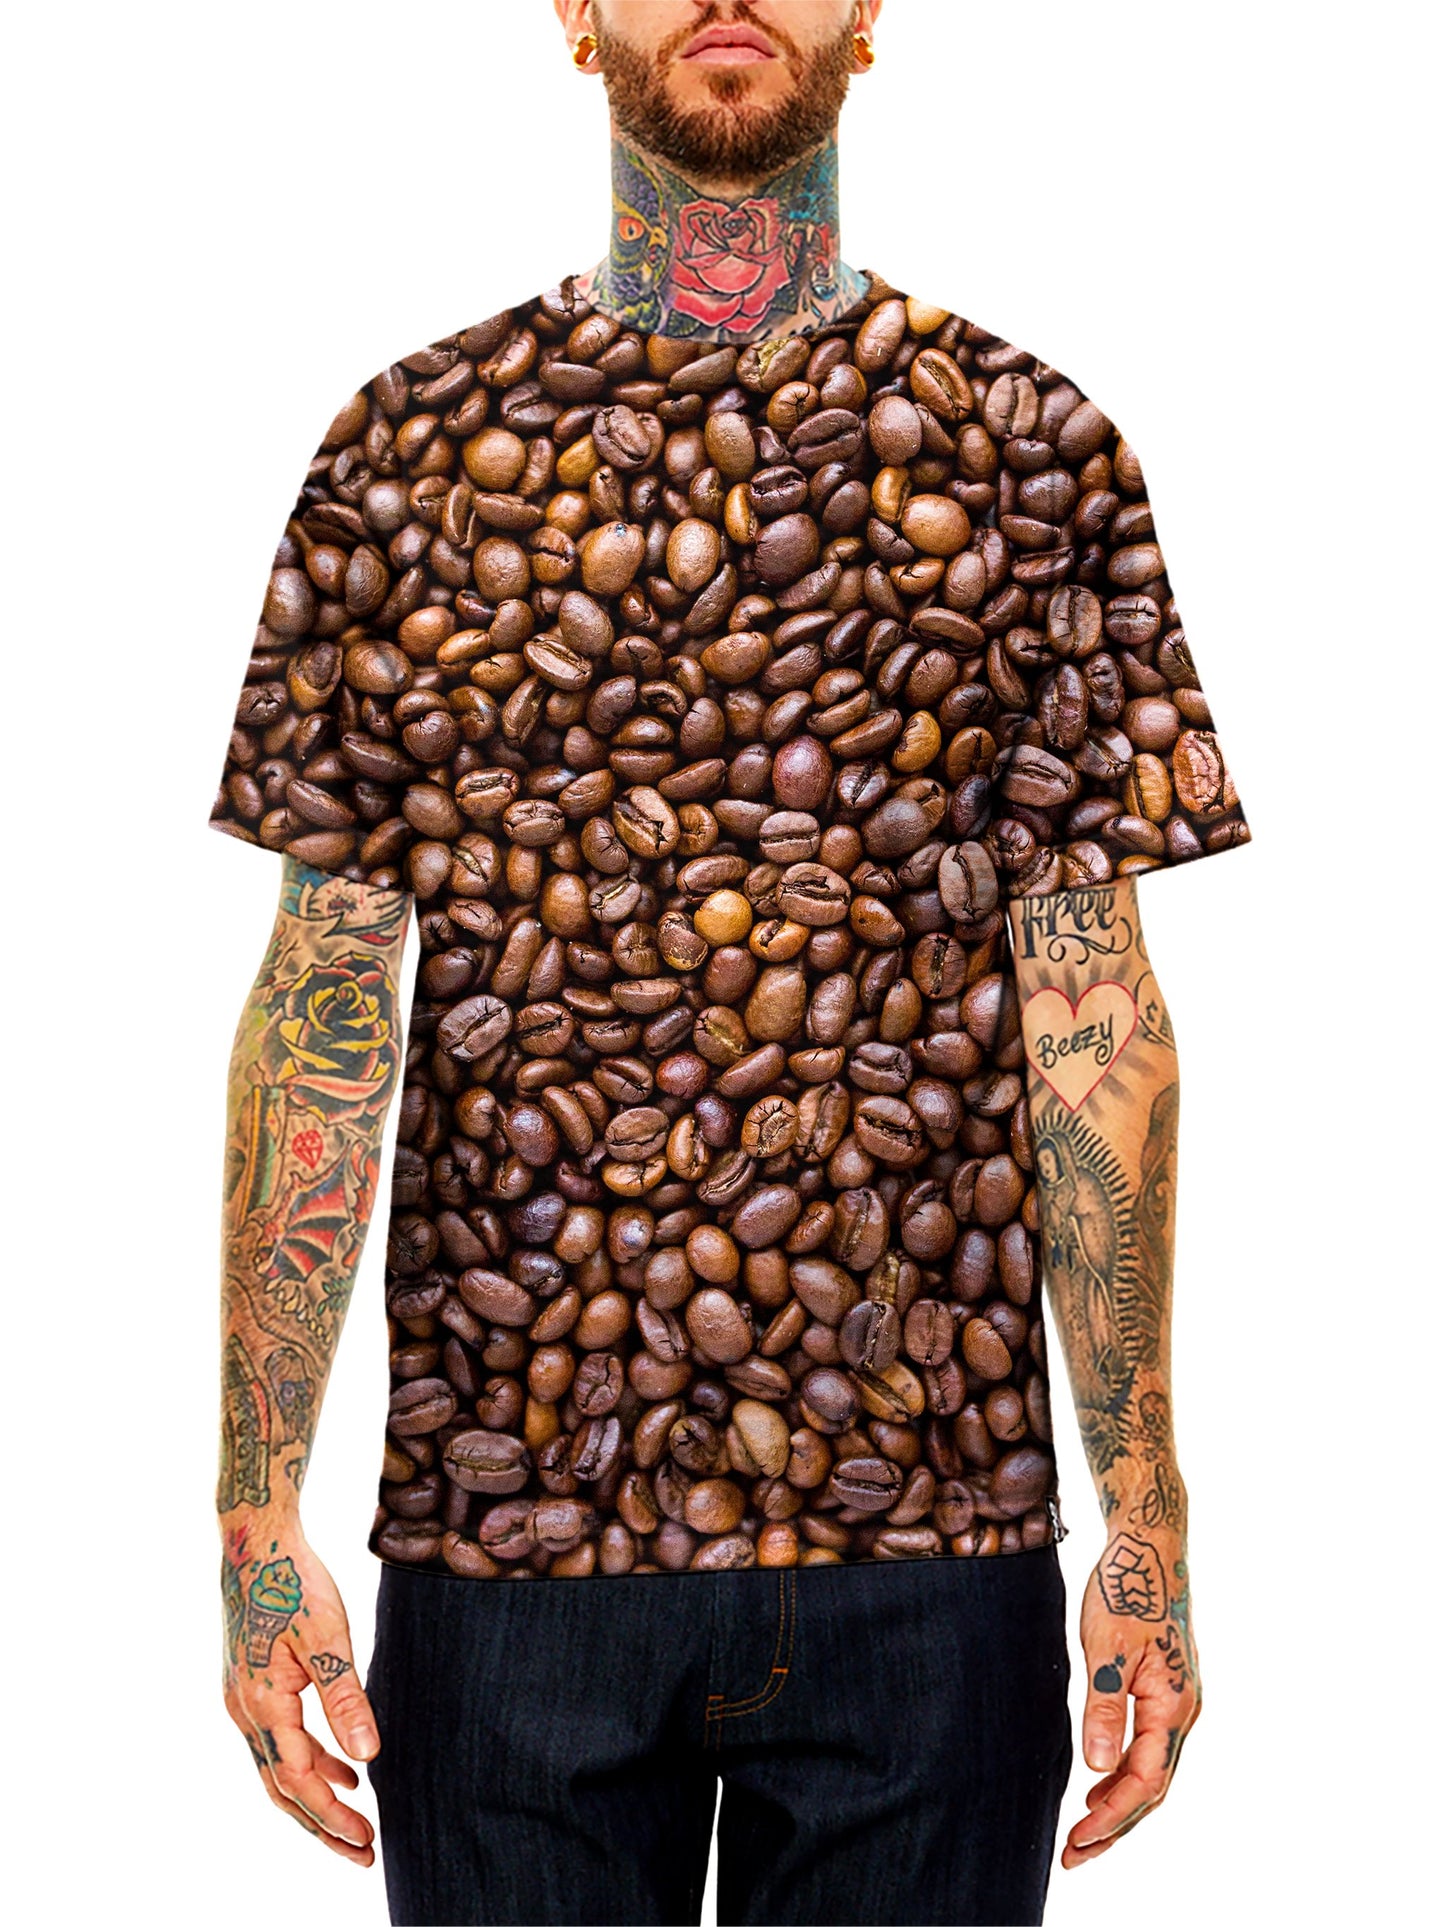 Model wearing GratefullyDyed Apparel brown & black coffee bean unisex t-shirt.